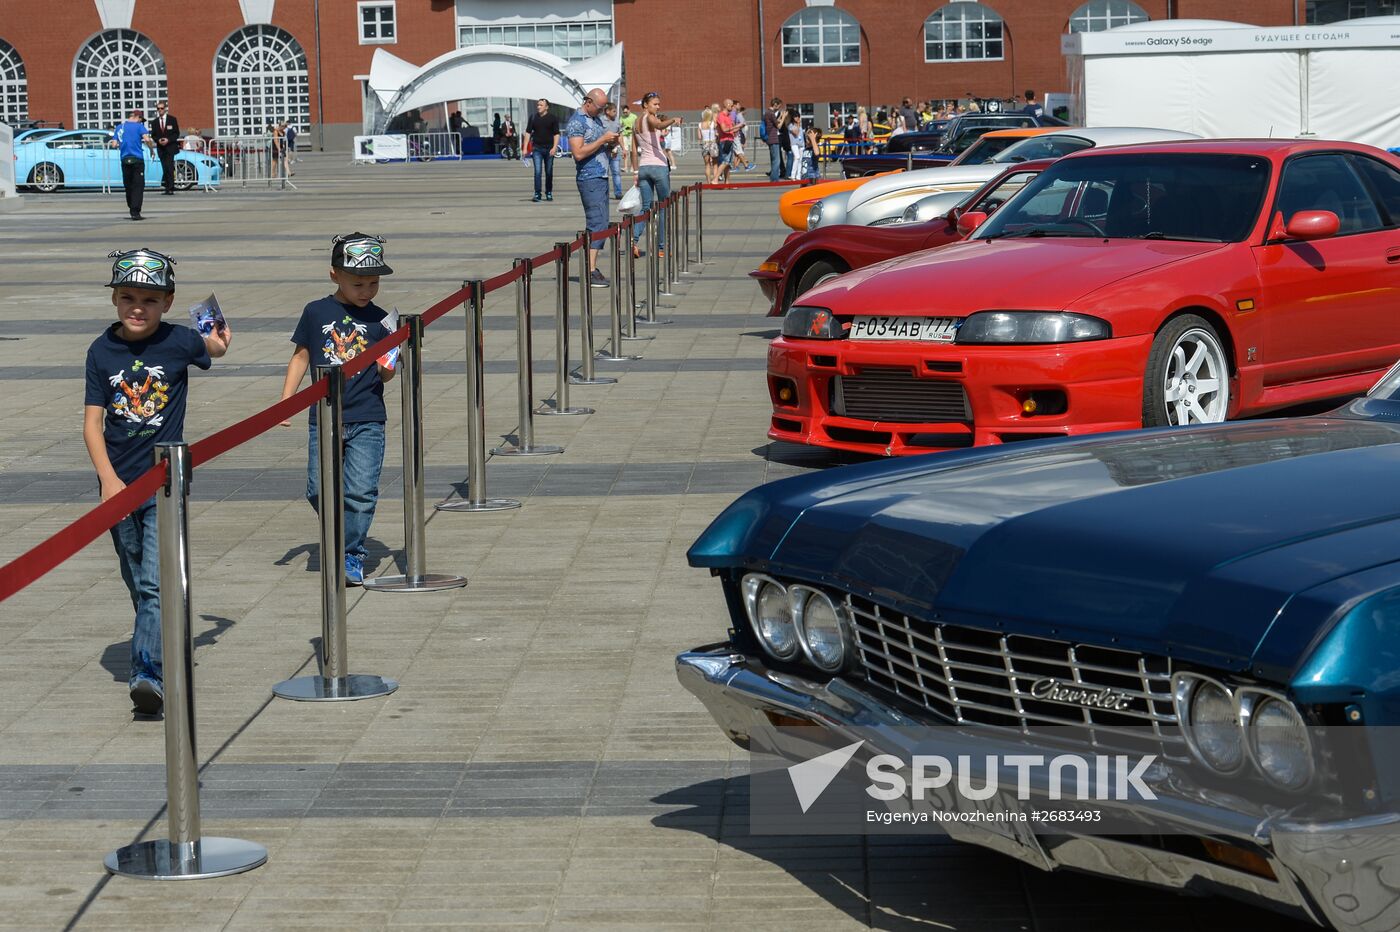 Moscow's Legends Park hosts Super Car Show 2015